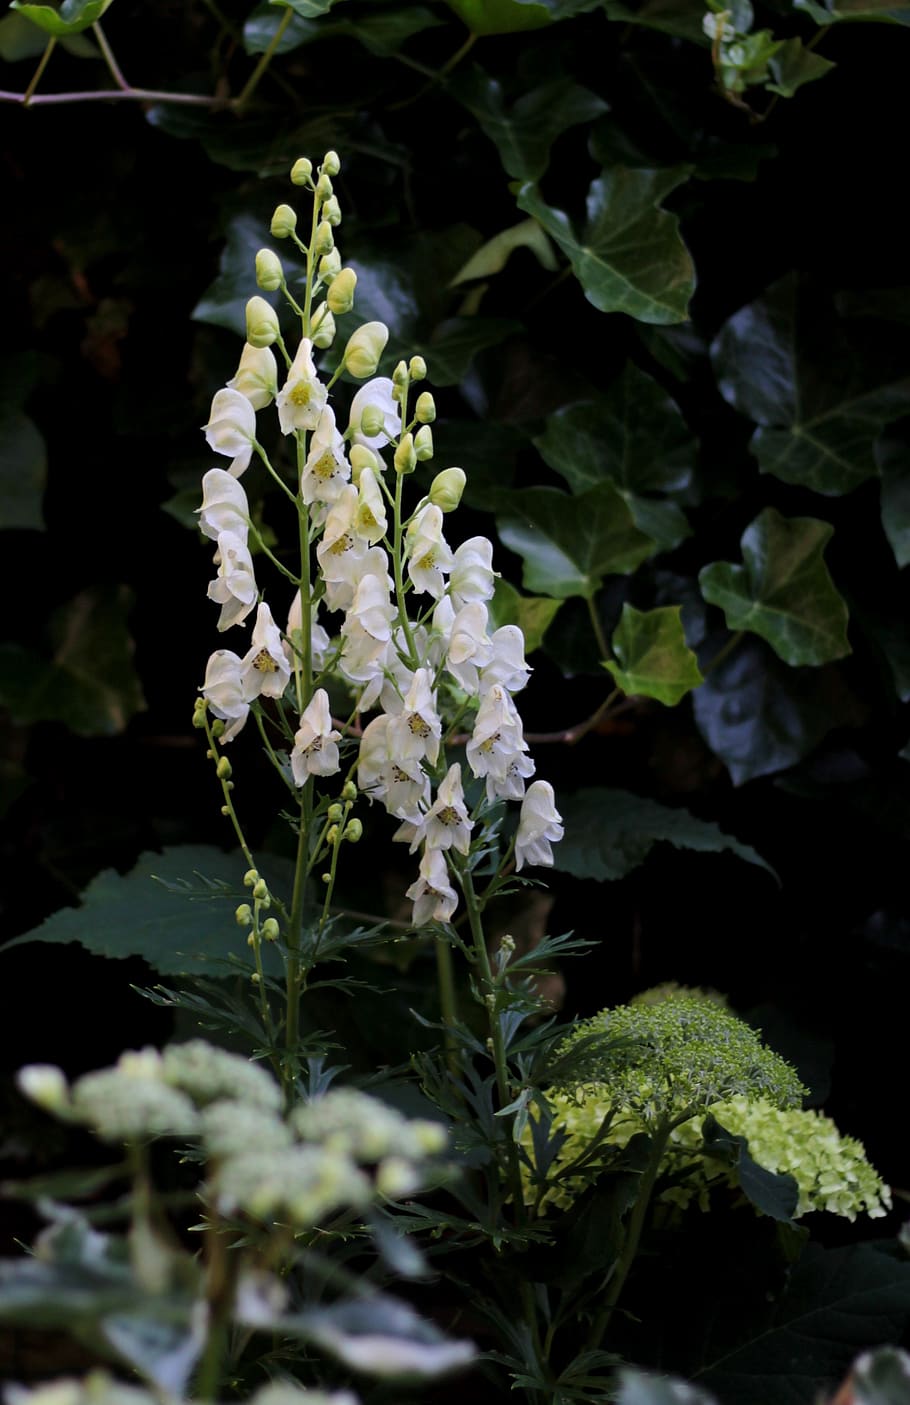 aconitum napellus album, aconite, white, toxic, plant, garden, bright, flowers, growth, beauty in nature